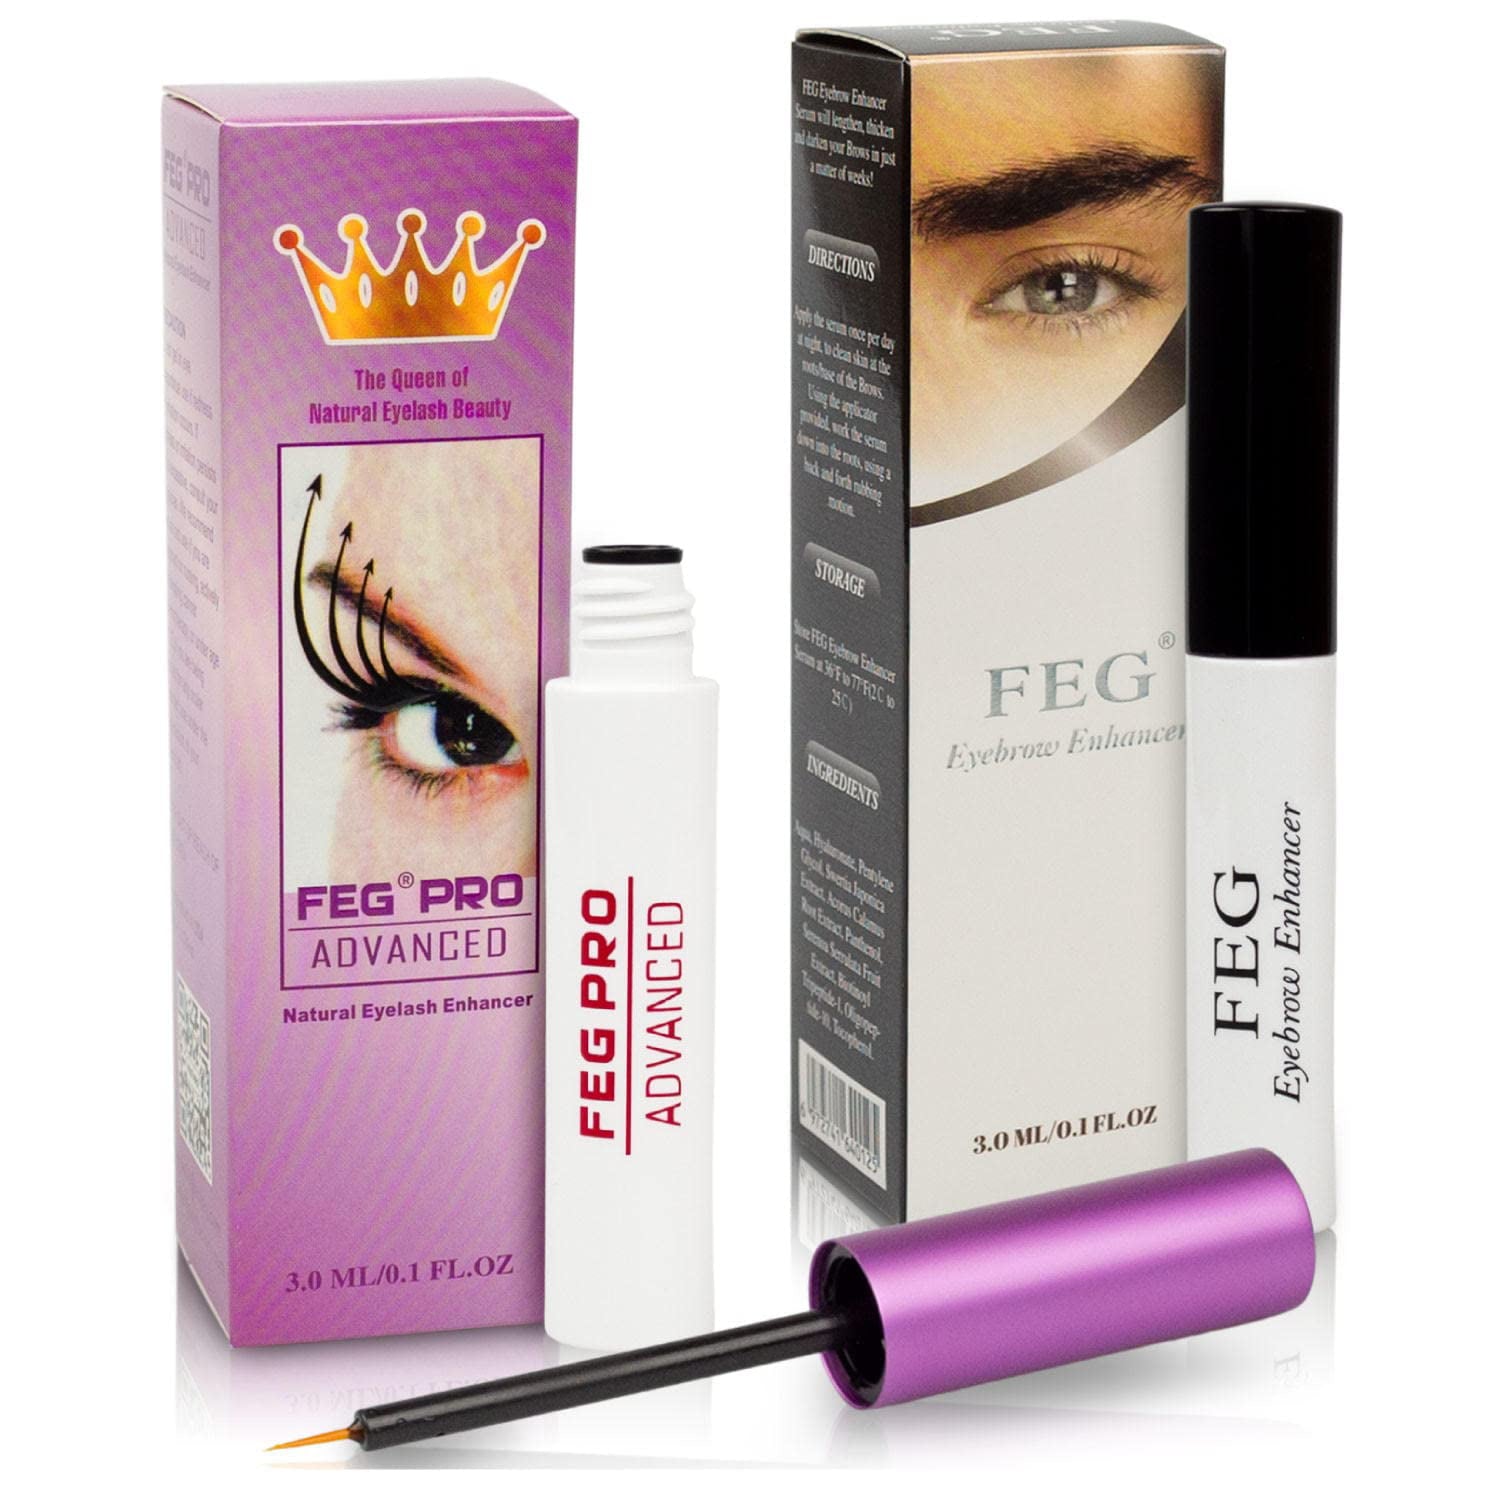 FEG Pro Eyelash & Eyebrow Serum | 100% Natural |Non-Irritating Ingredients | Enhance Eyelash & Eyebrow Growth for great looking eyelashes and eyebrows. 100% Authentic